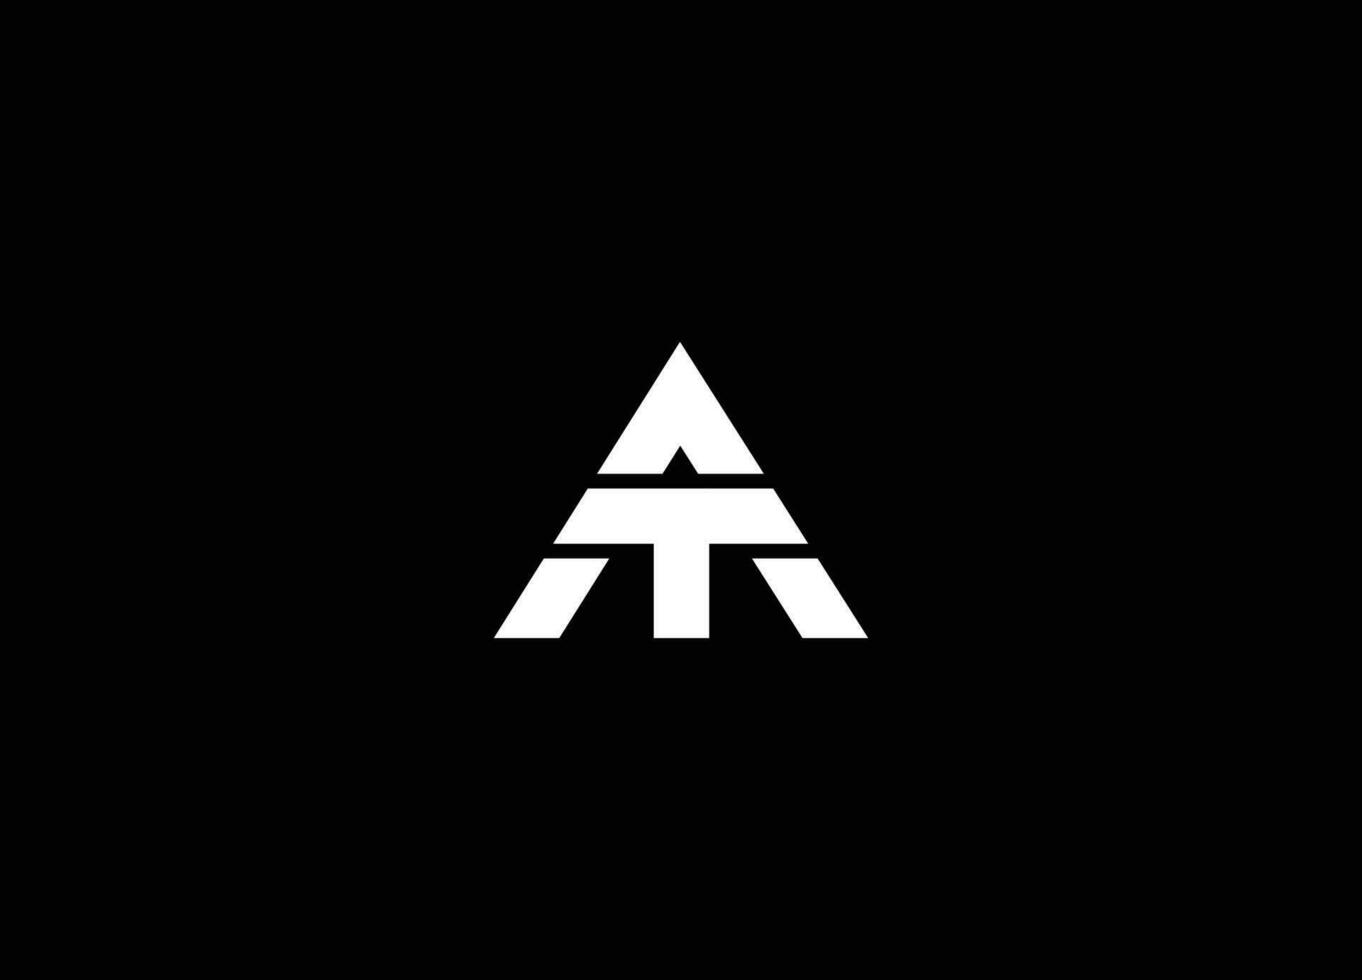 AT letter logo design and monogram logo vector